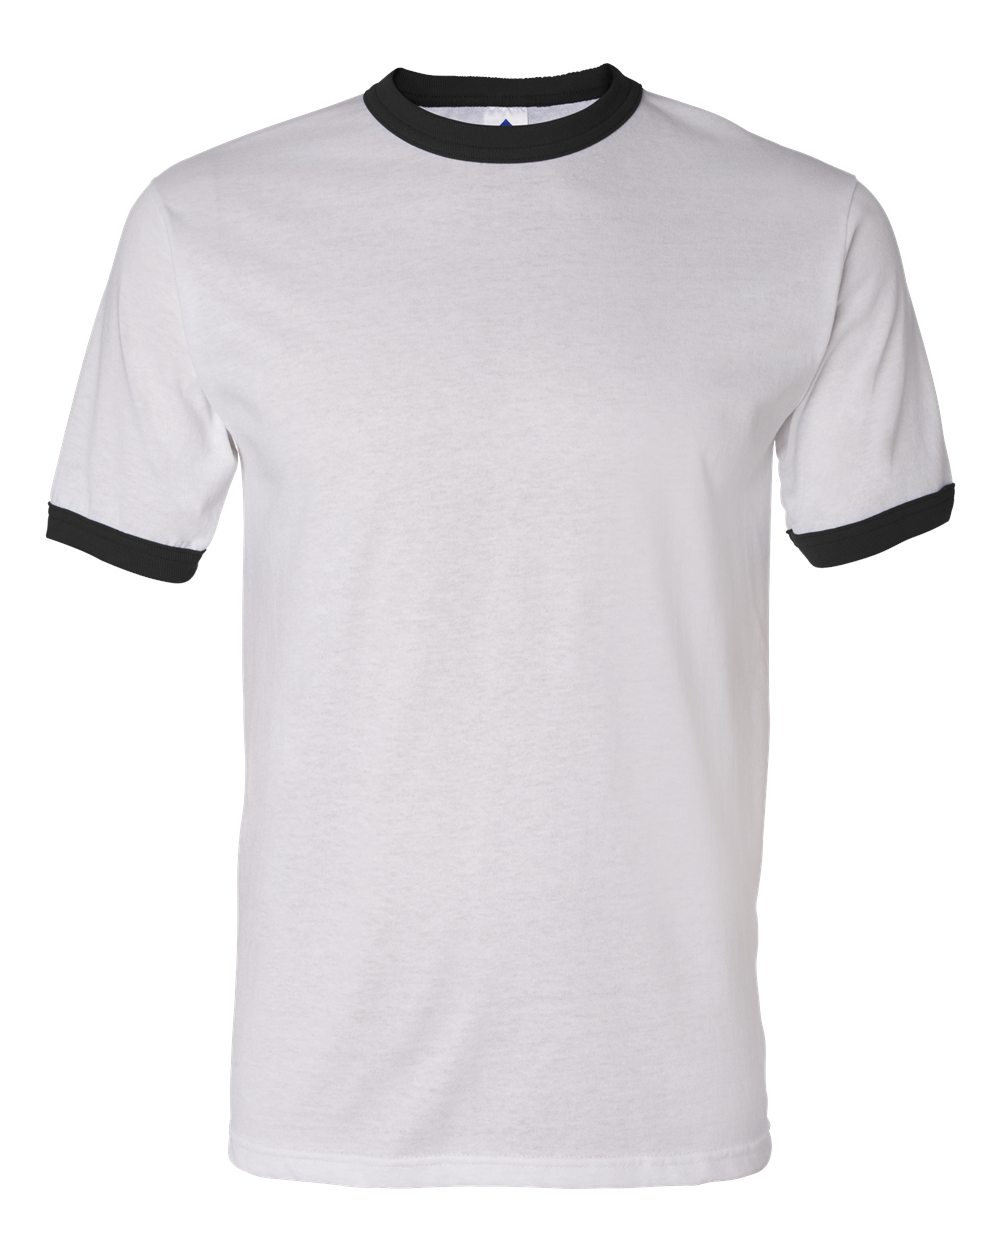 Augusta Mens Short Sleeve Sportswear 50/50 Ringer T-Shirt 710 up to 3XL ...